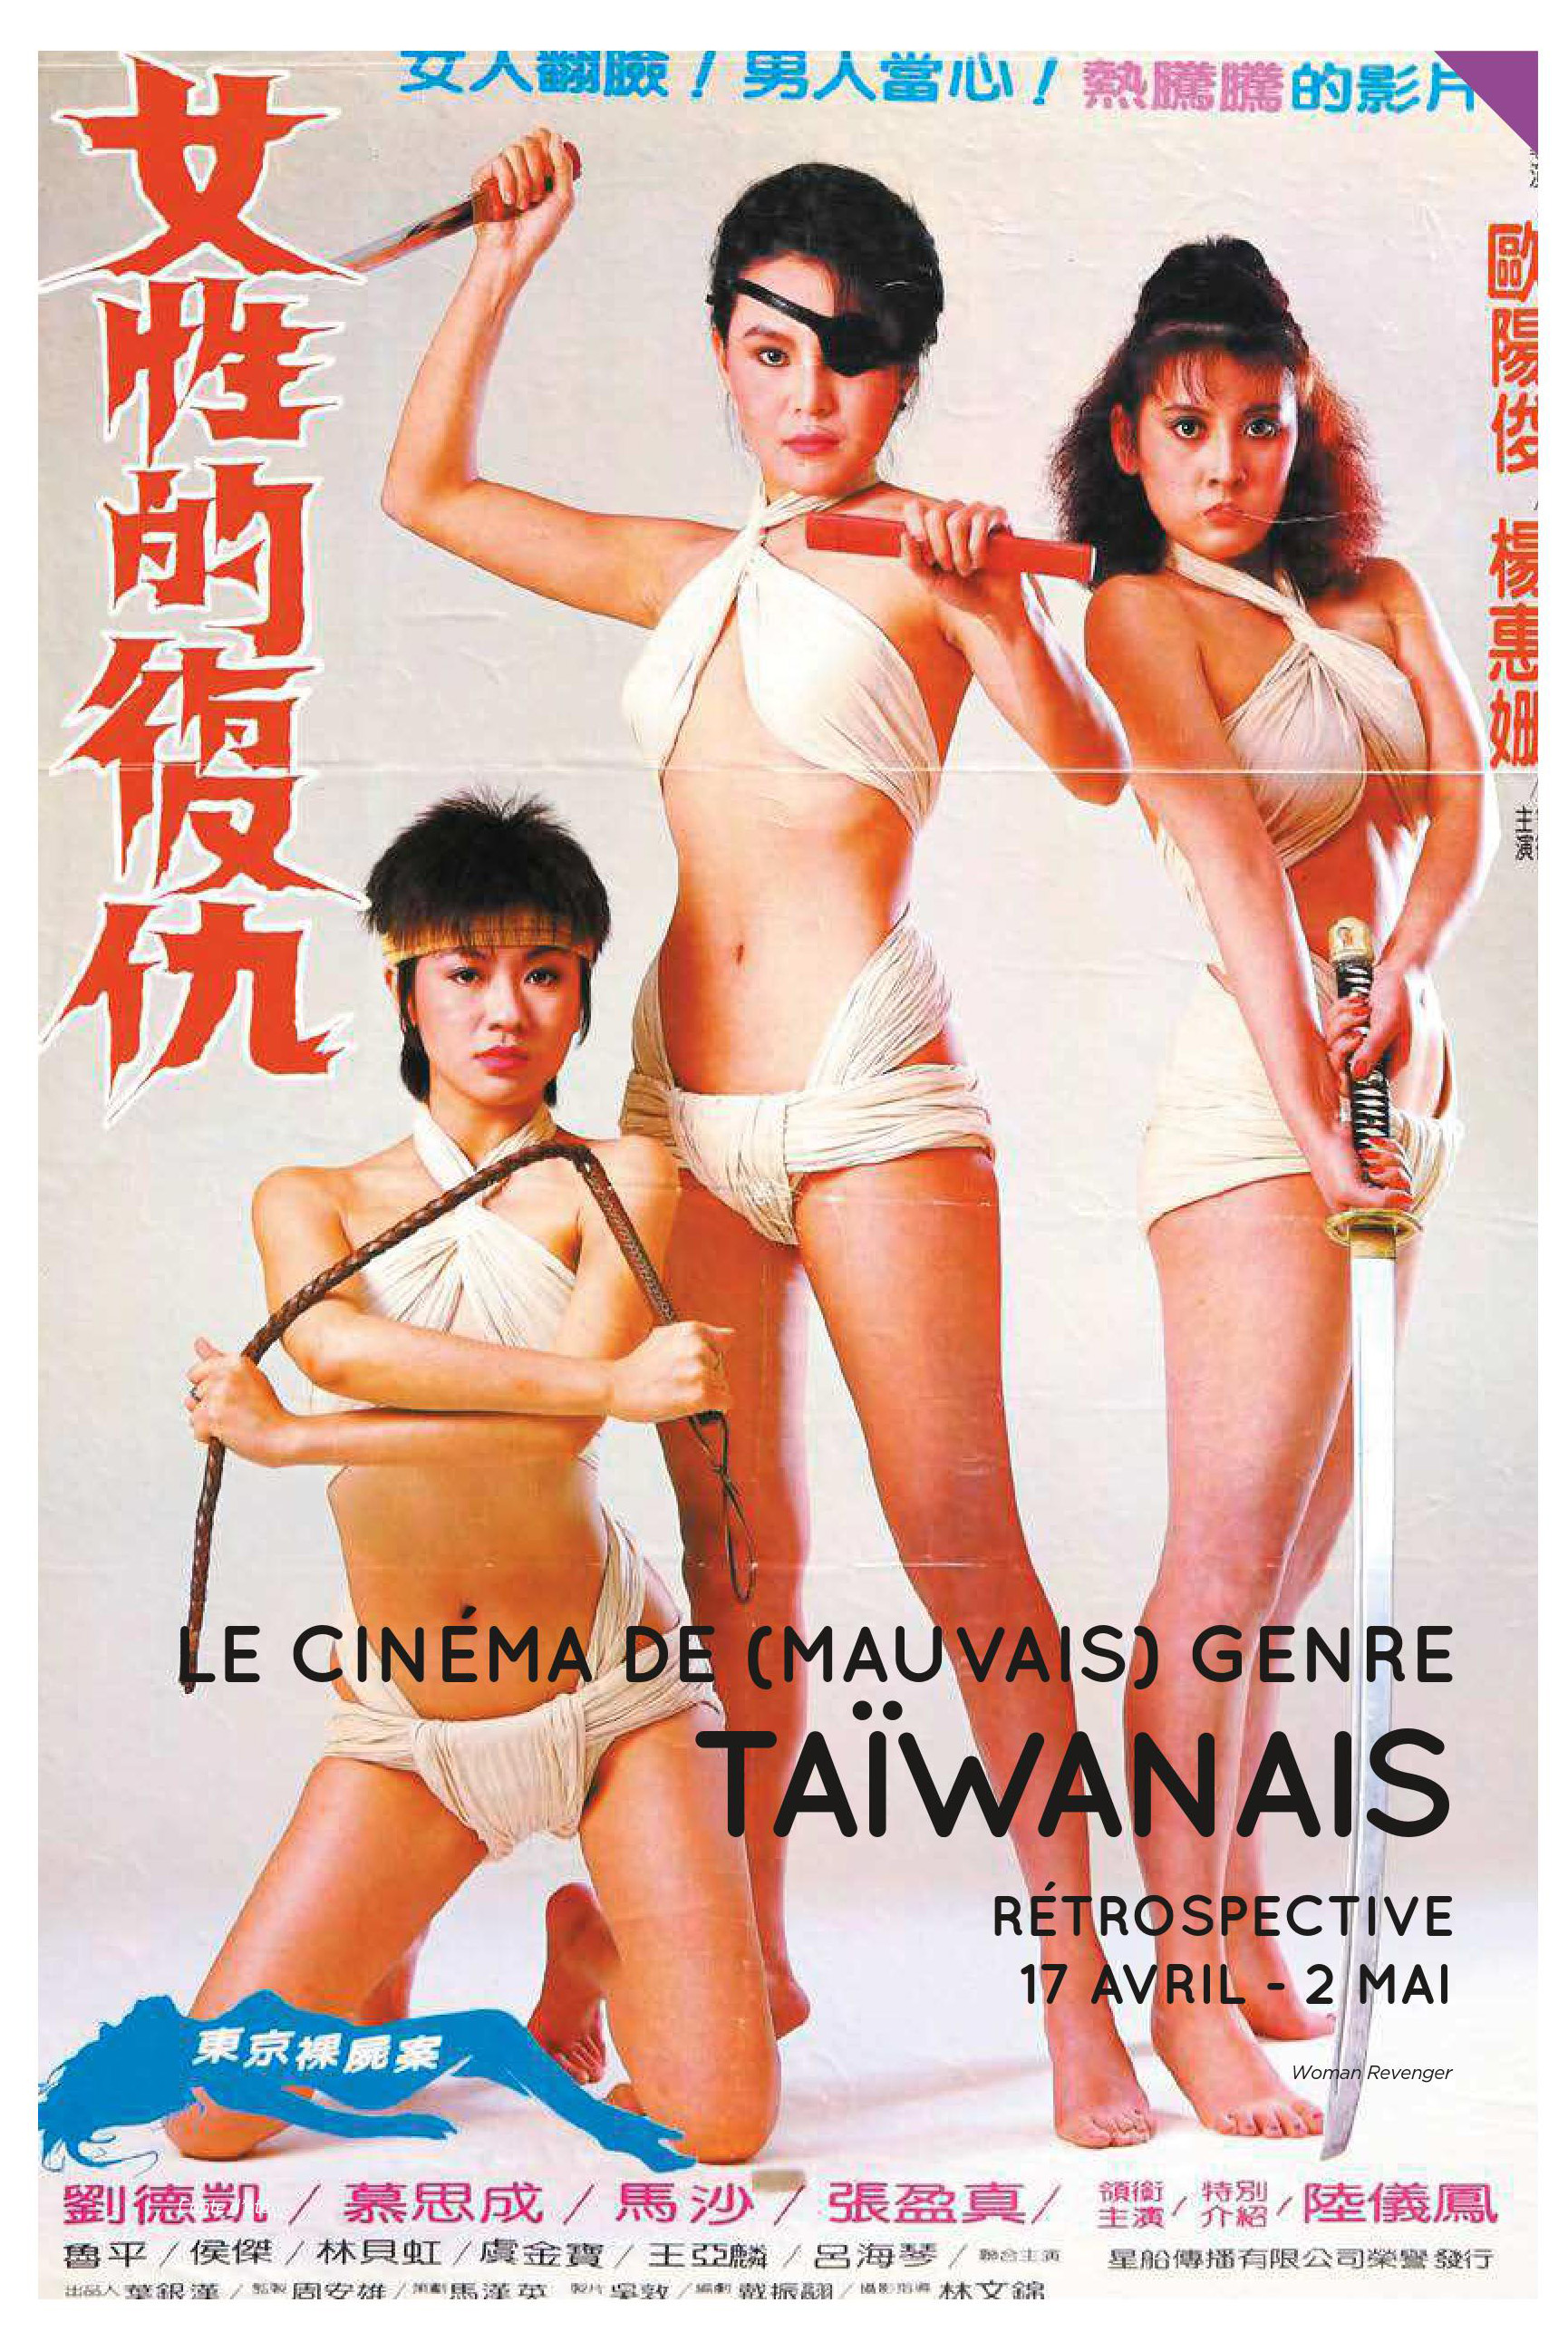 Paris film festival to showcase the ‘bad’ side of Taiwan cinema